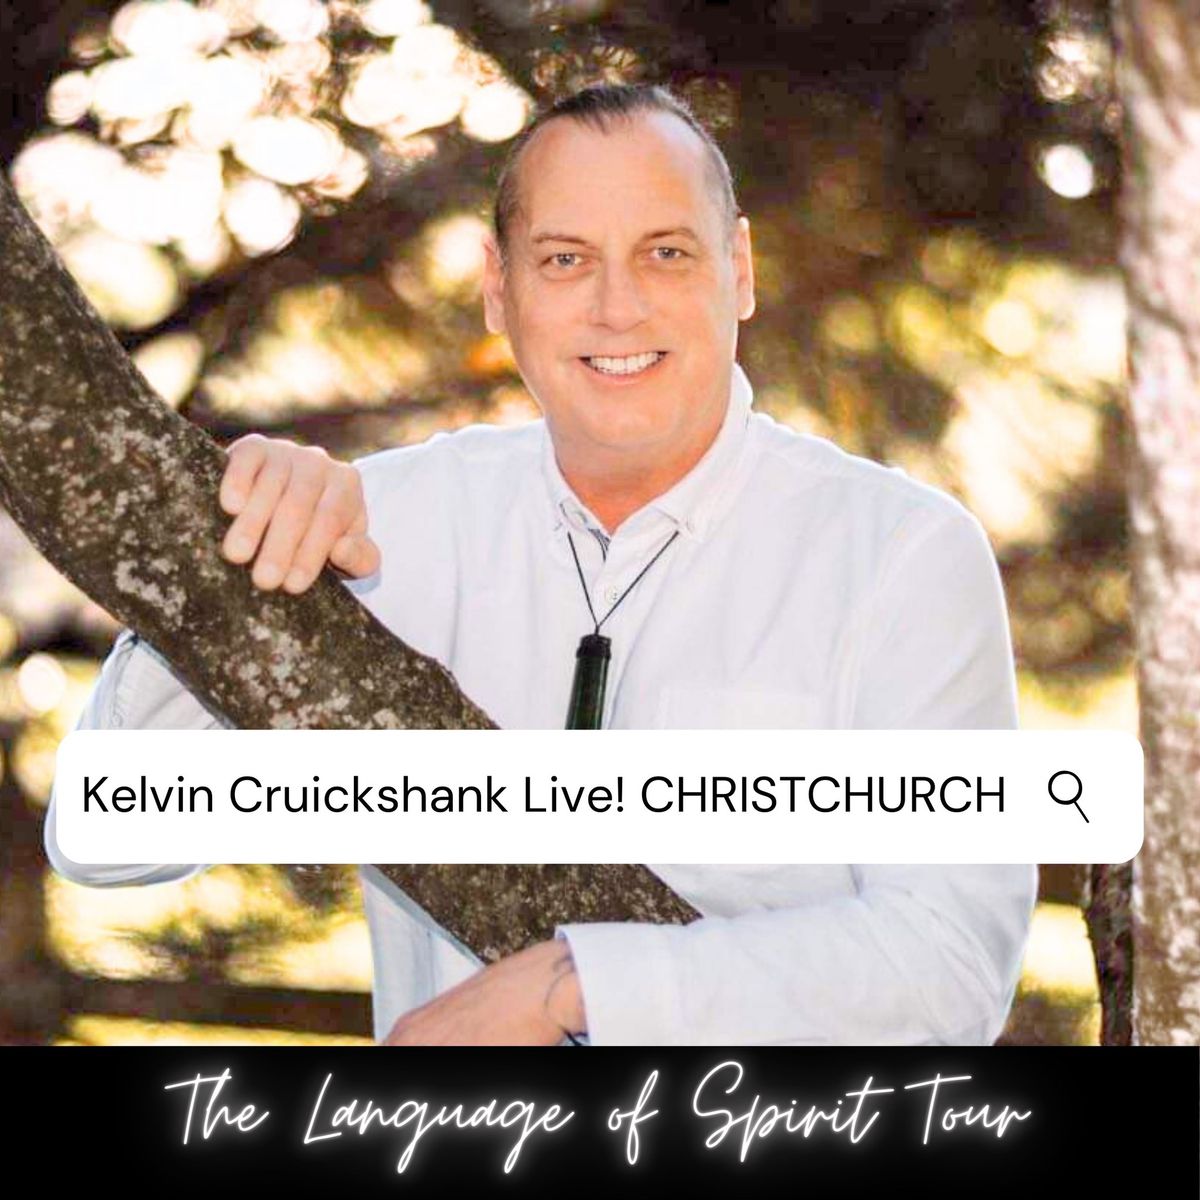 Kelvin Cruickshank Live -  "The Language of Spirit" Tour - CHRISTCHURCH SOLD OUT!